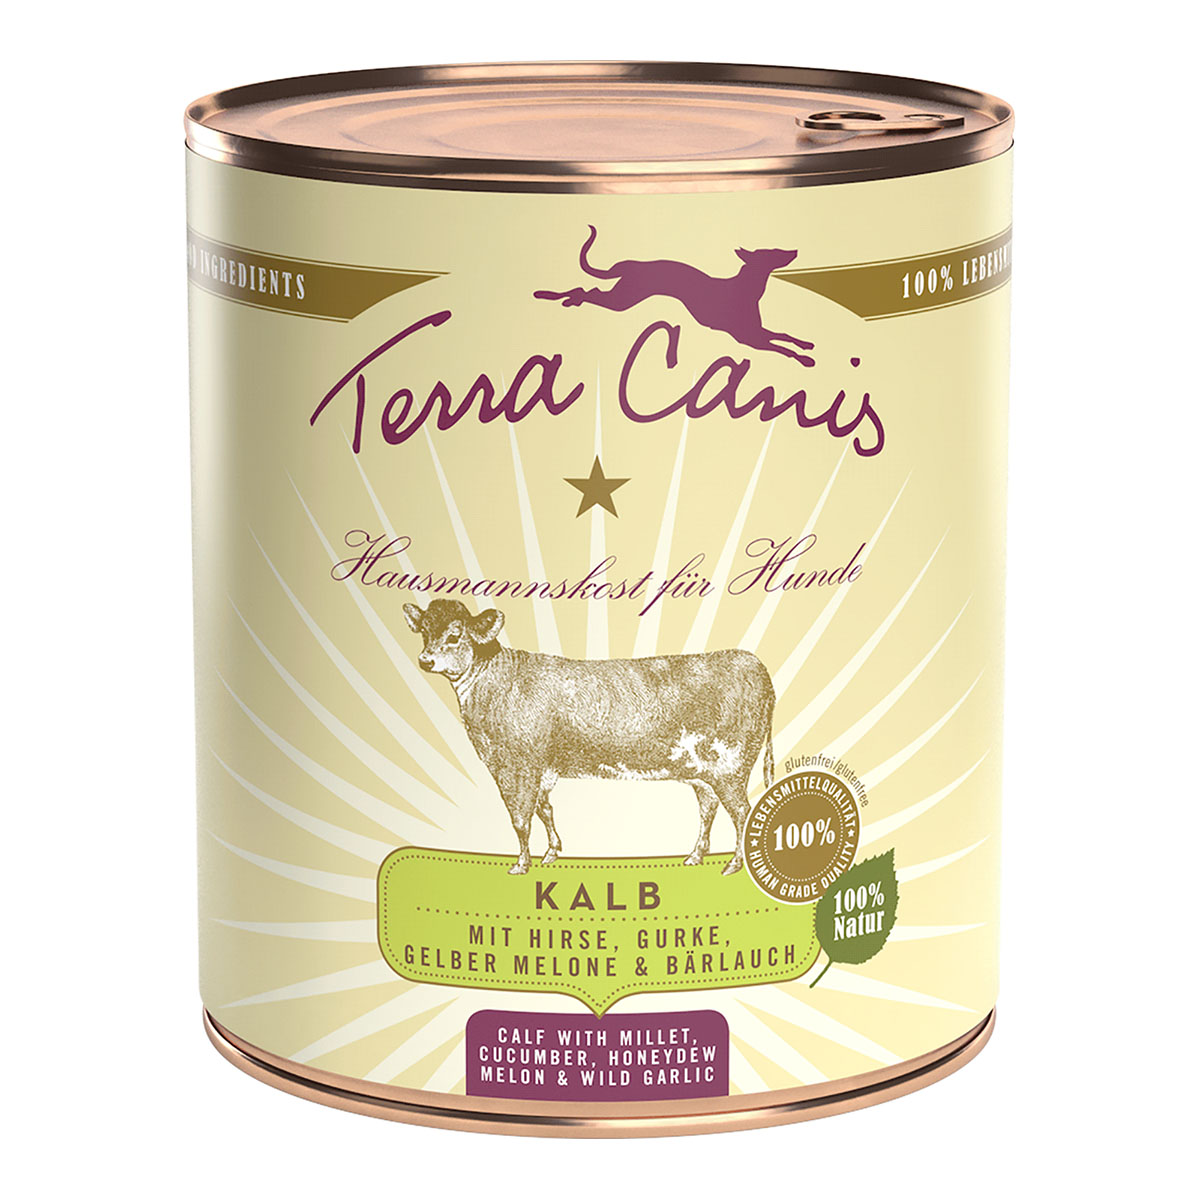 Terra Canis CLASSIC Kalb mit Hirse, Gurke, Melone 6x800g von Terra Canis